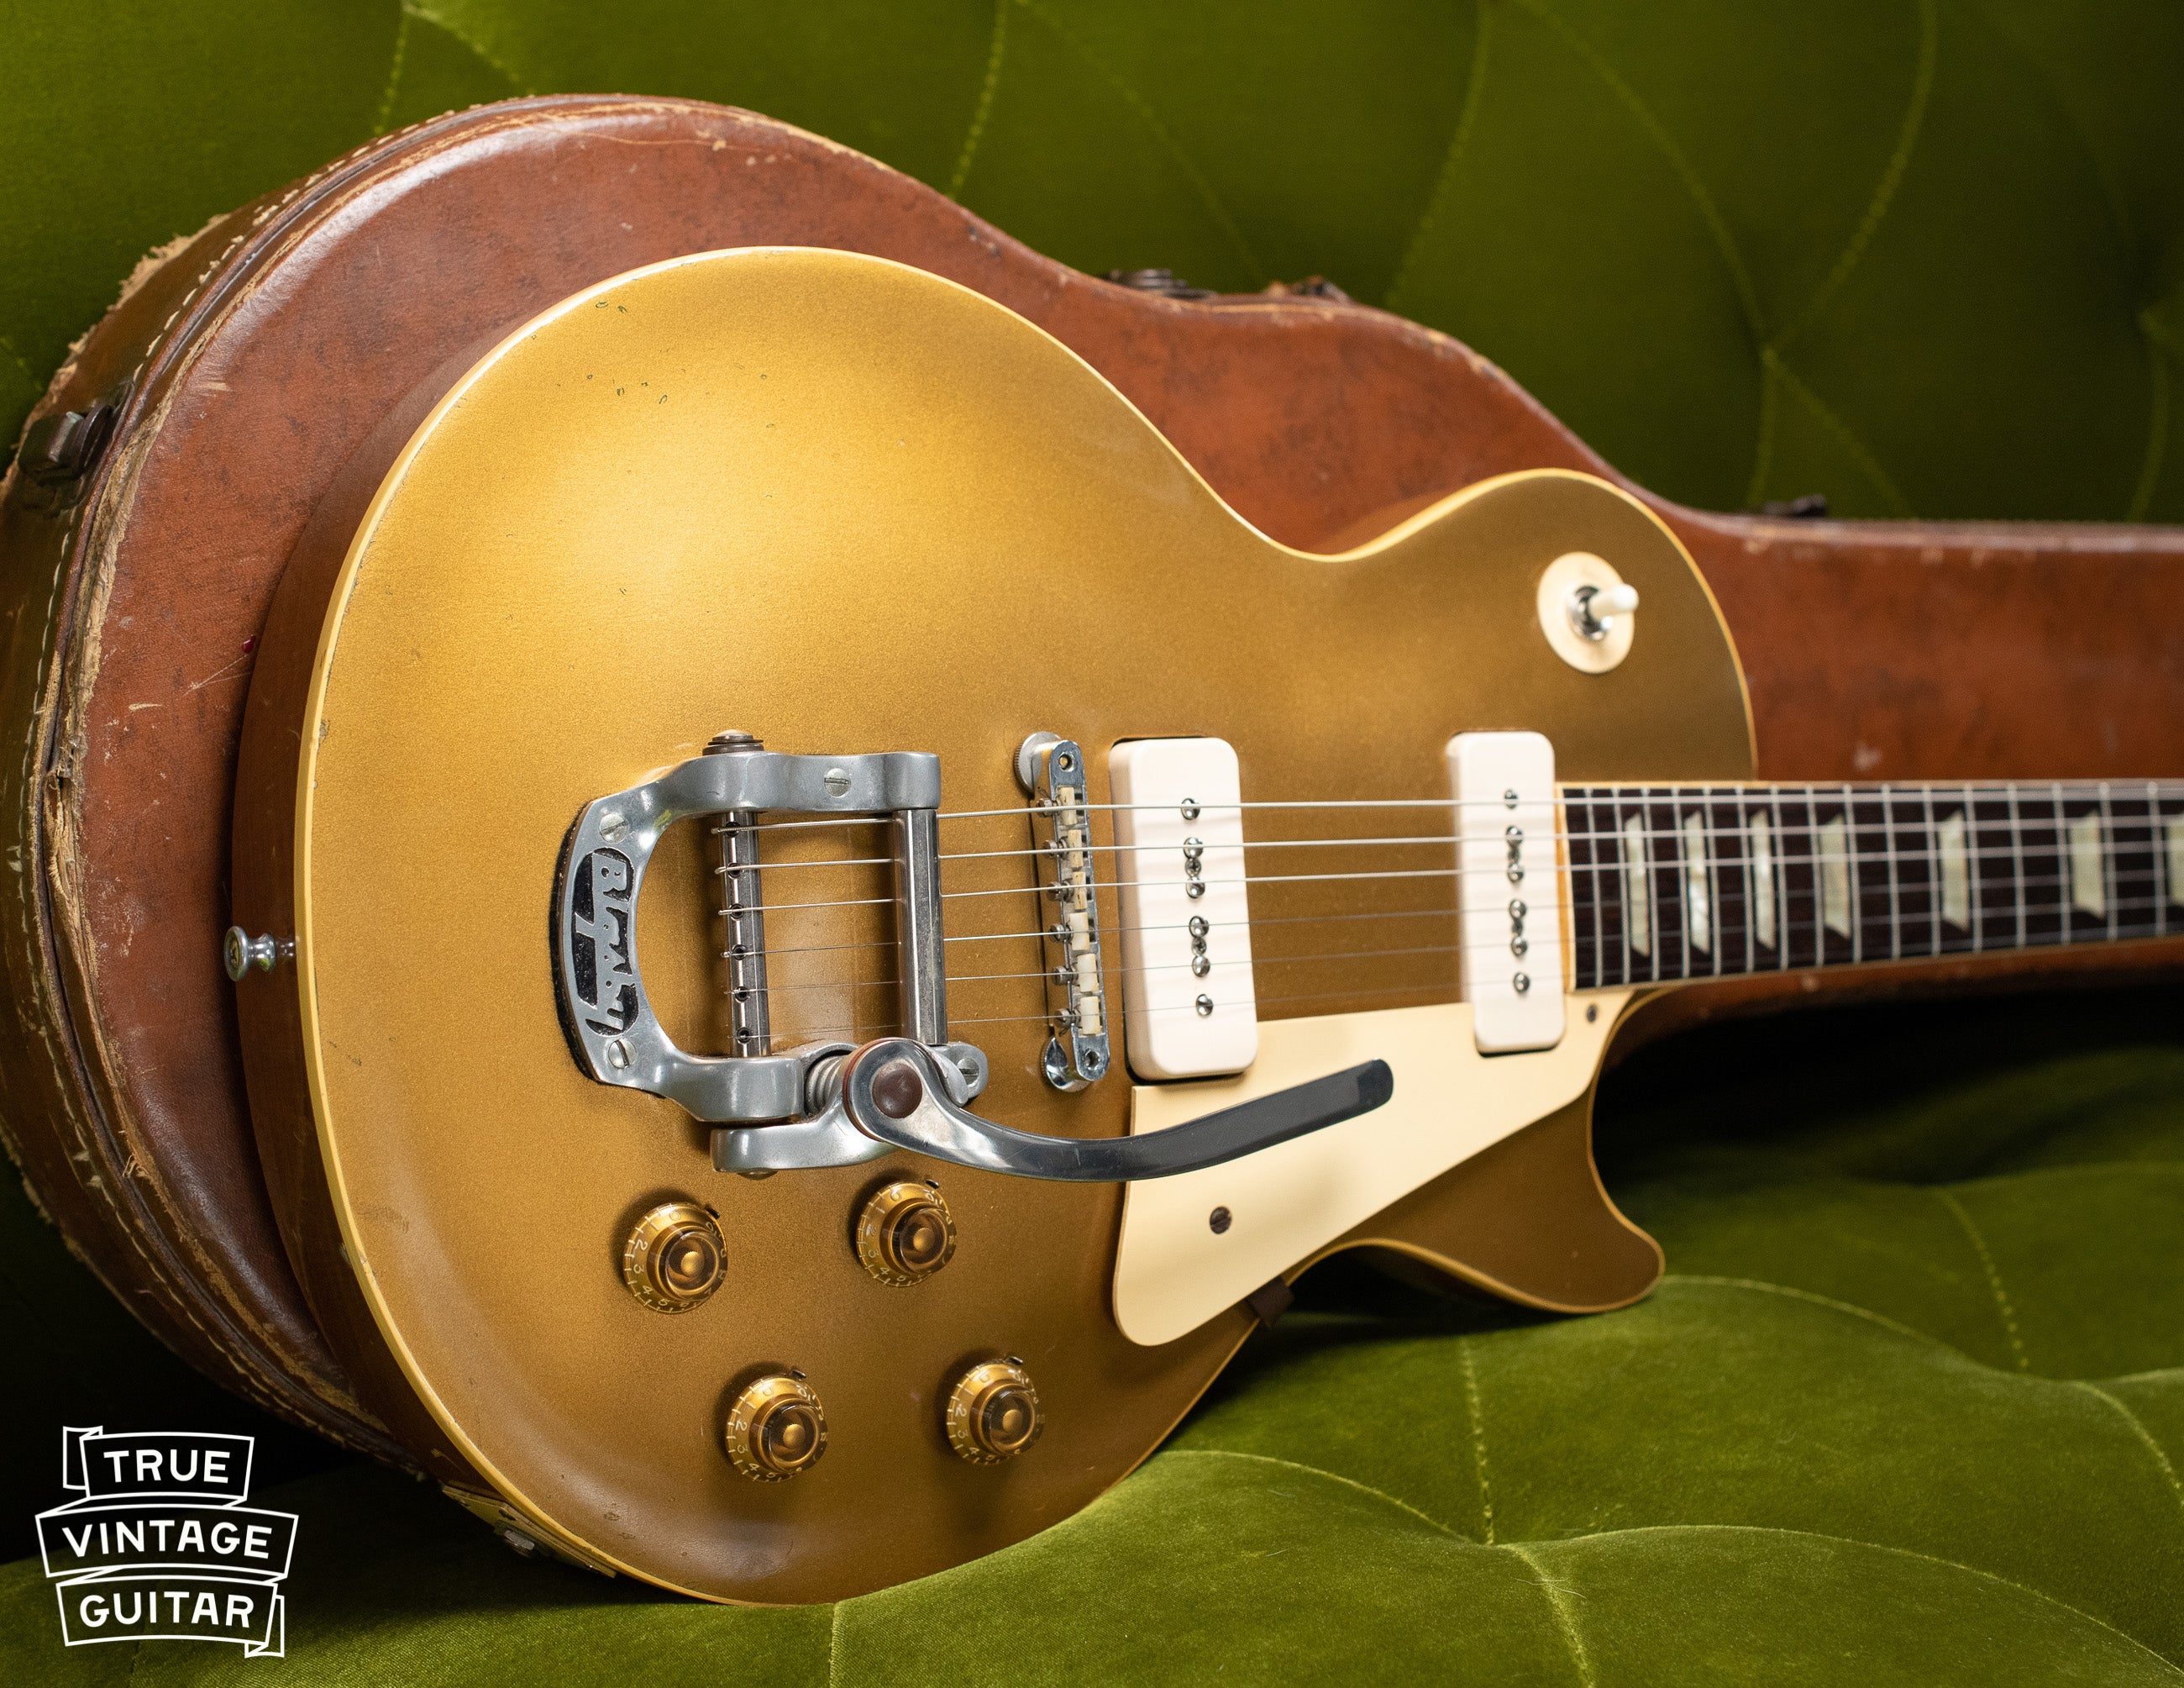 Vintage 1955 Gibson Les Paul Model goldtop electric guitar